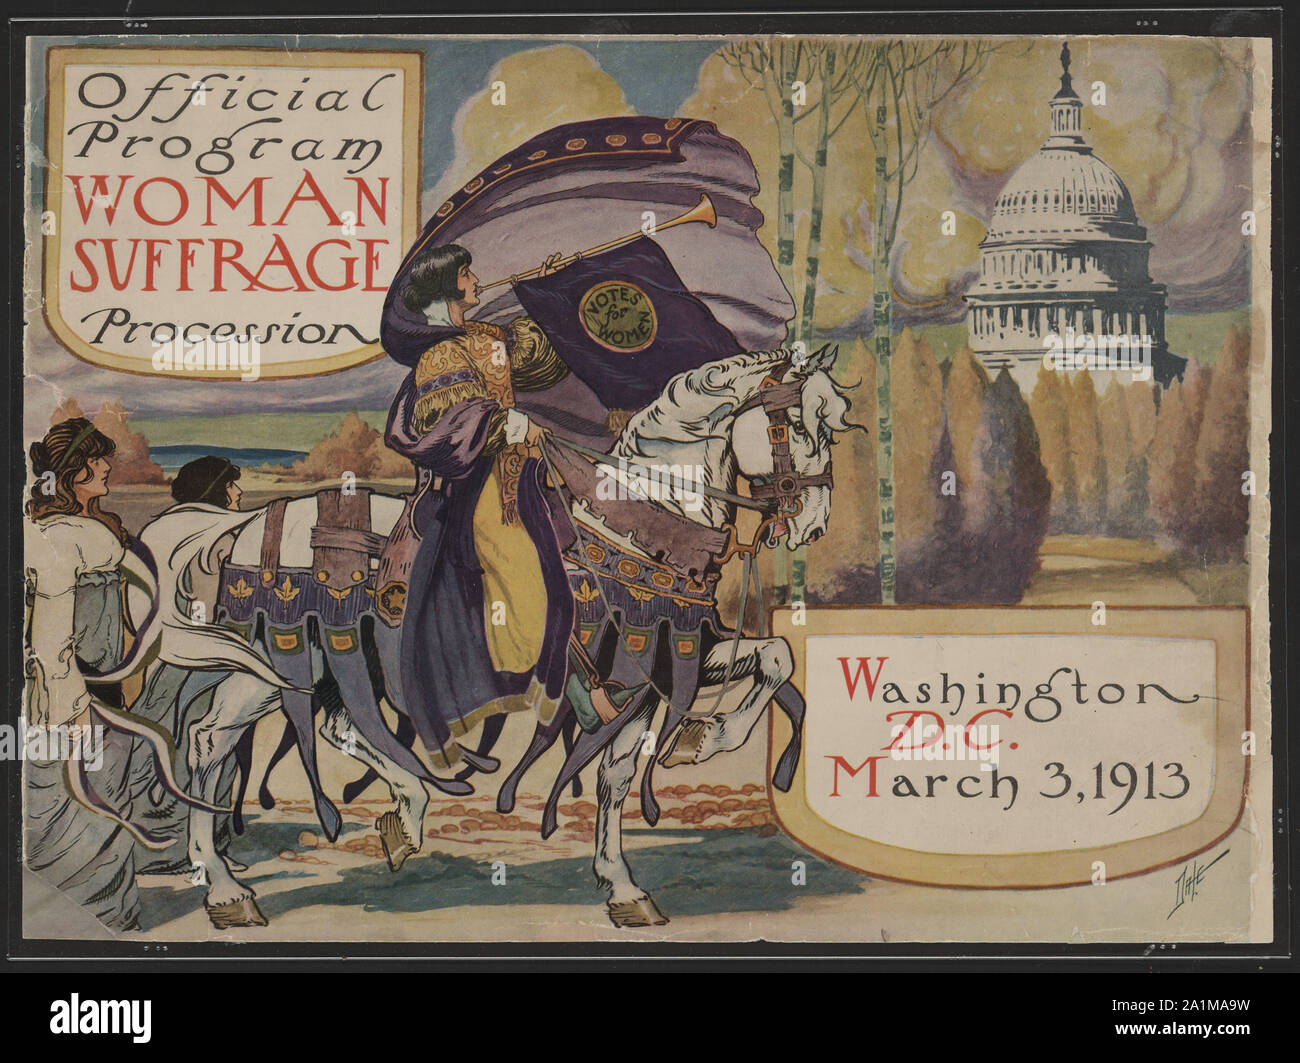 Offizielle Programm - Frau Wahlrecht Prozession, Washington, D.C. März 3, 1913/Dale. Stockfoto